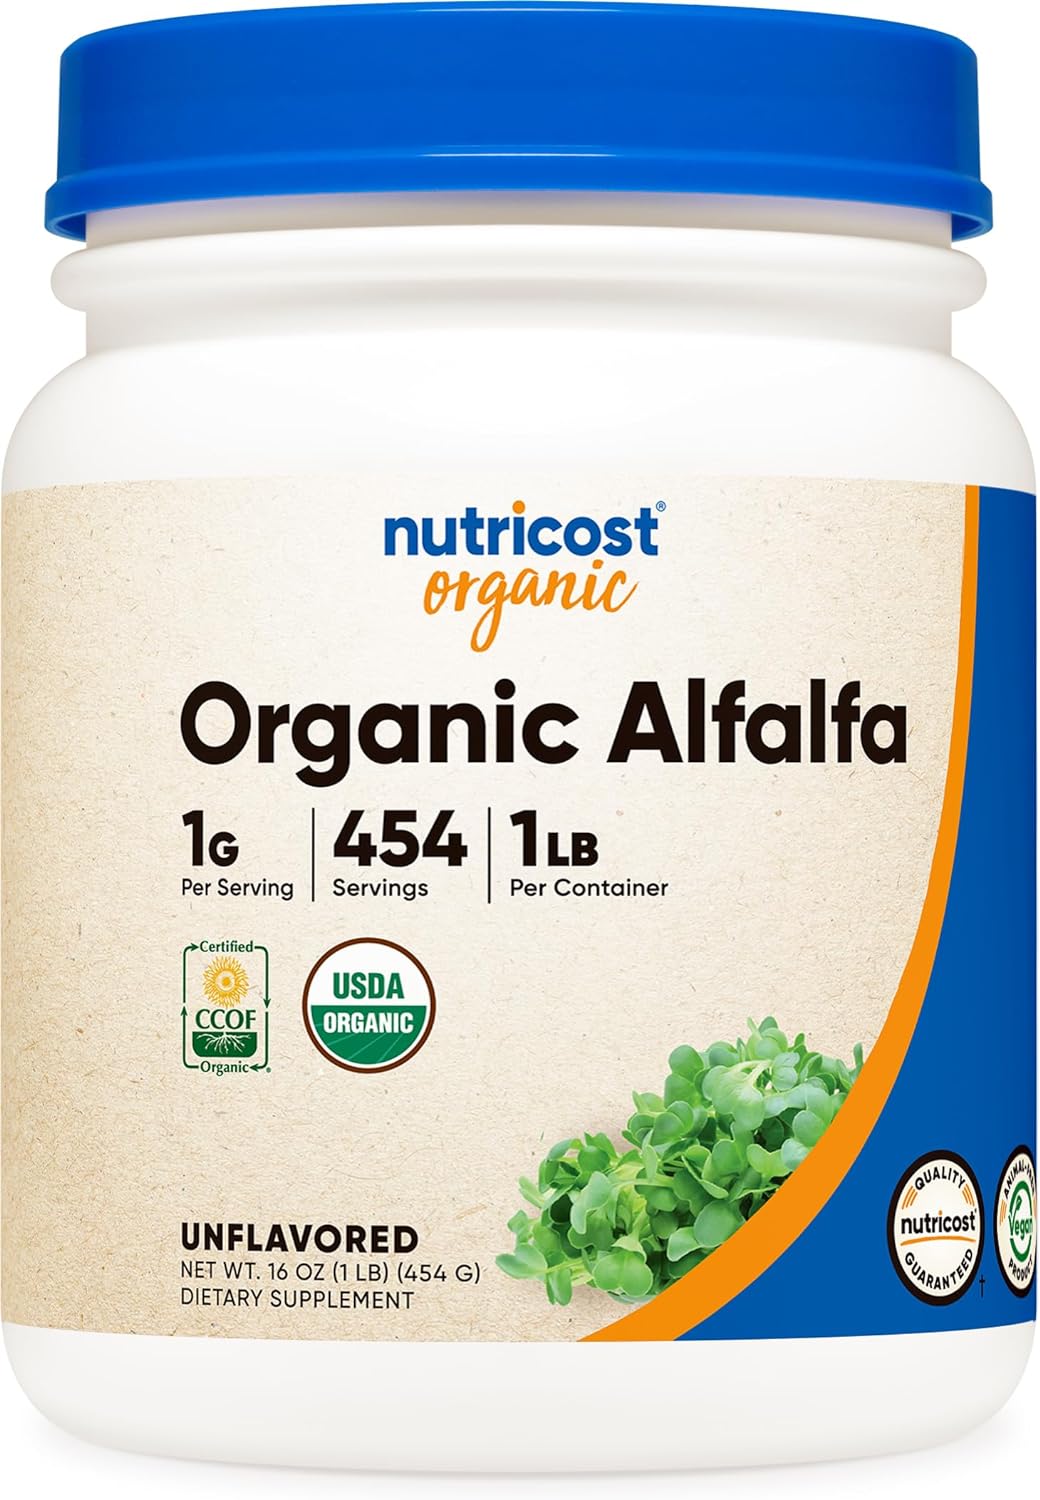 Nutricost Organic Alfalfa Powder 1LB - USDA Certified 100% Organic, Ve